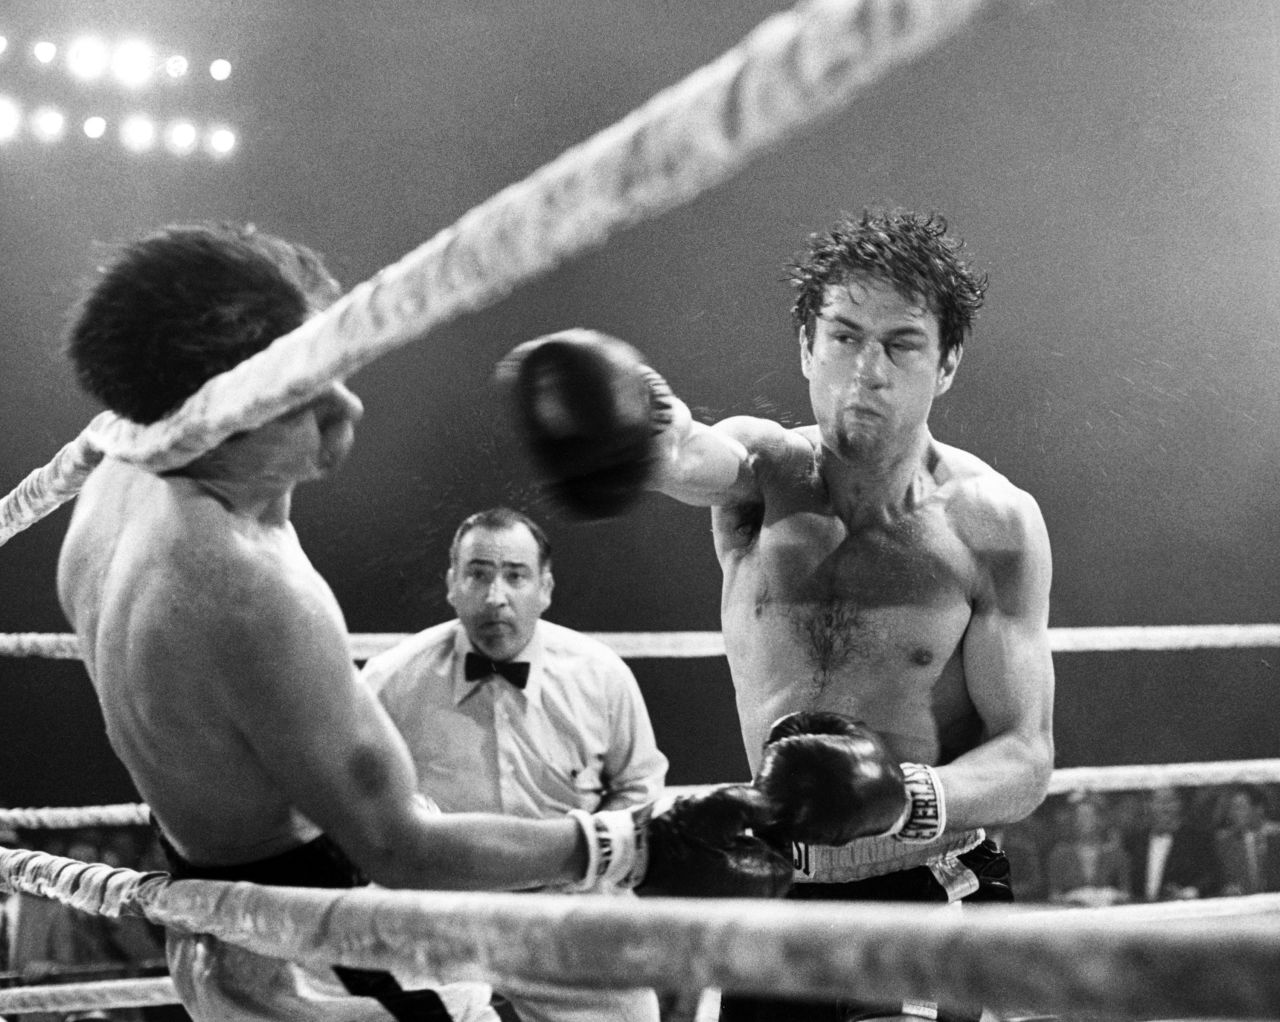 De Niro played boxer Jake LaMotta in 1980's "Raging Bull." It won him his second Oscar.